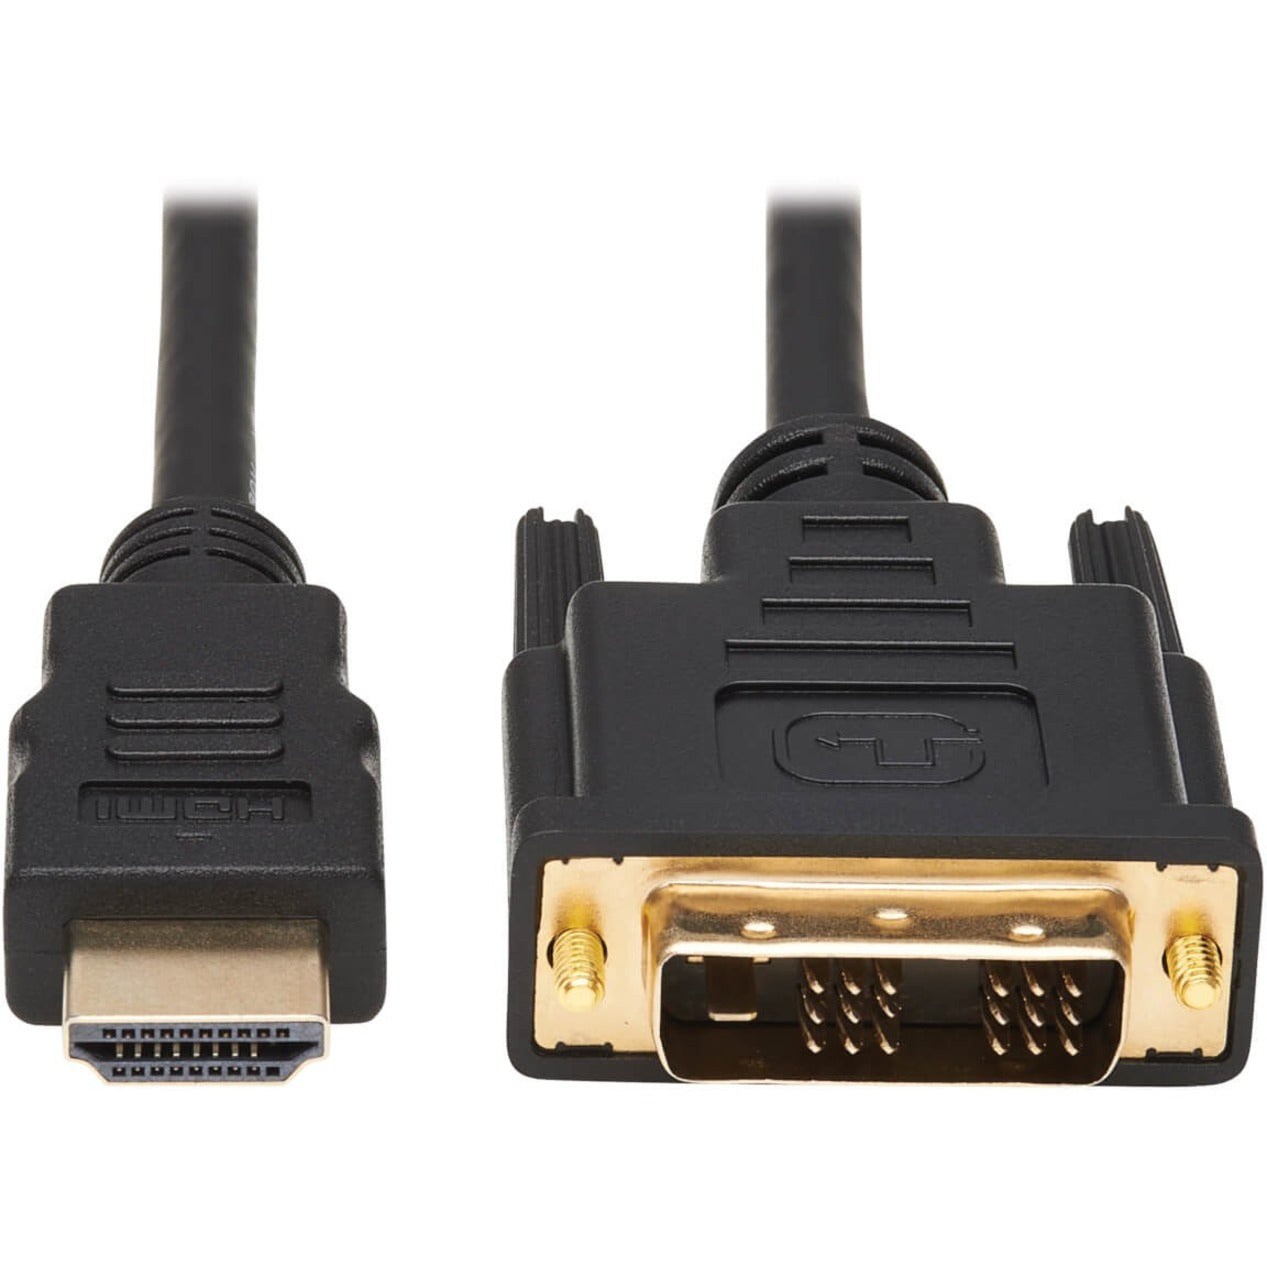 Tripp Lite P566-006 6' HDMI/DVI Cable, Black